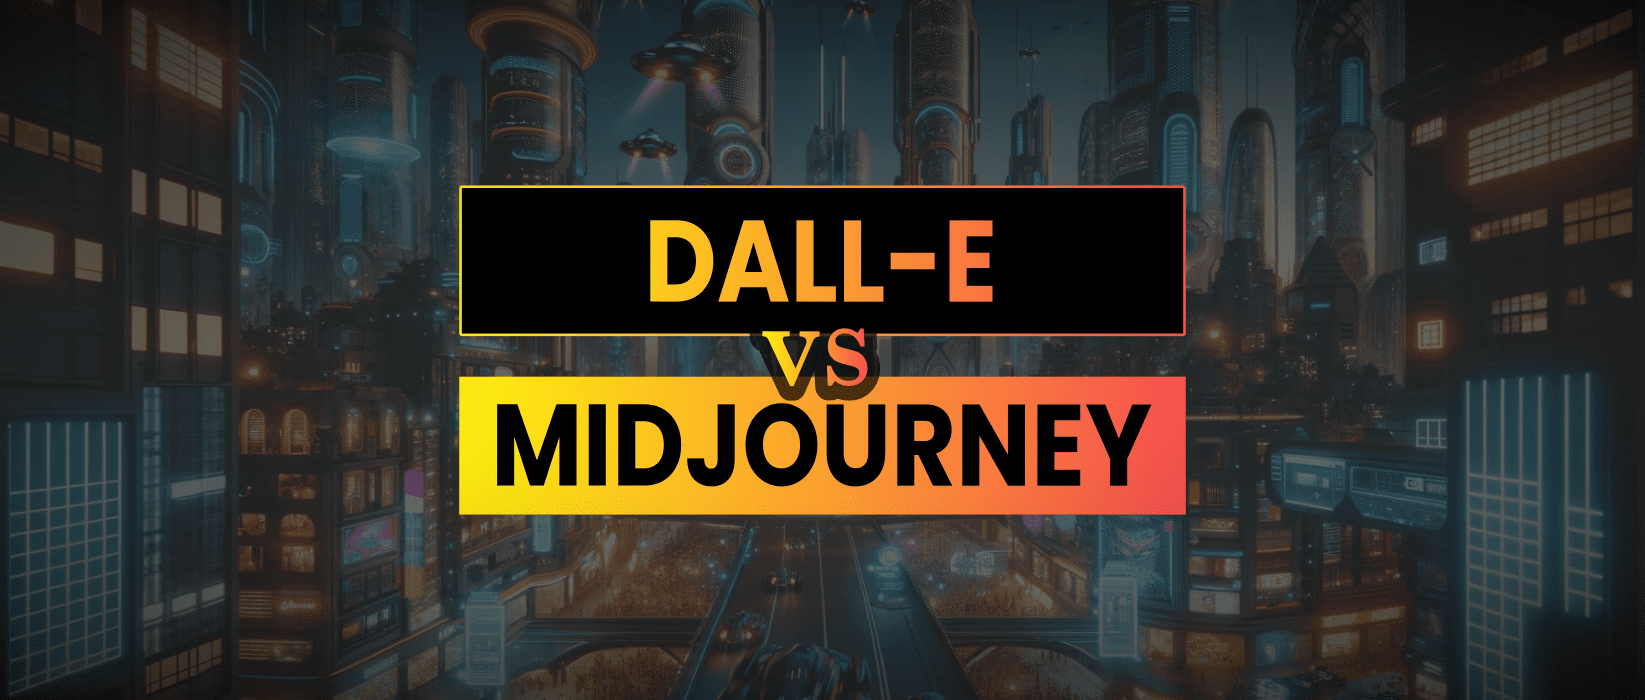 Midjourney vs Dall-E (ChatGPT) | Best AI Image Generator Tests